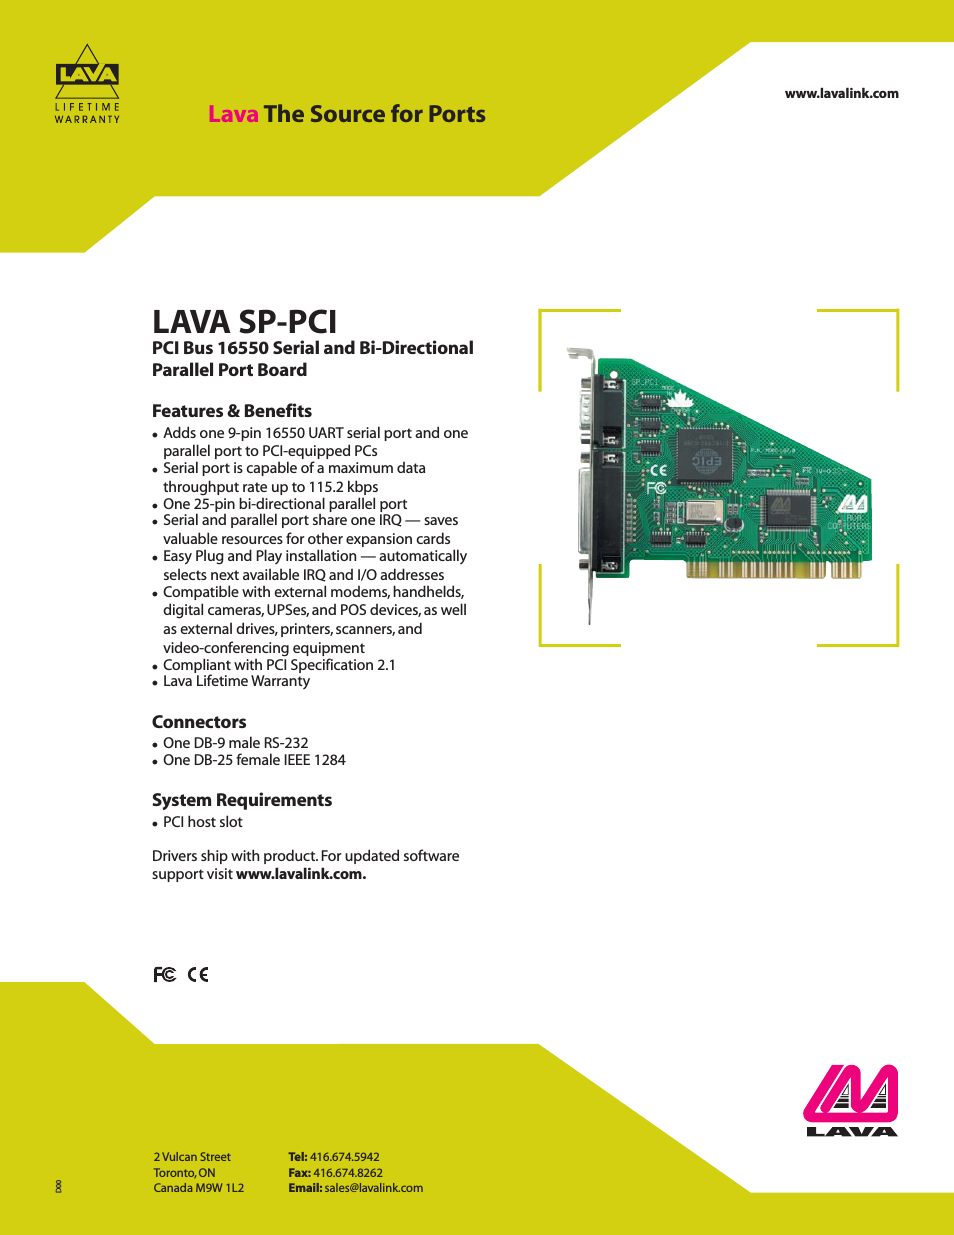 LAVA SP-PCI